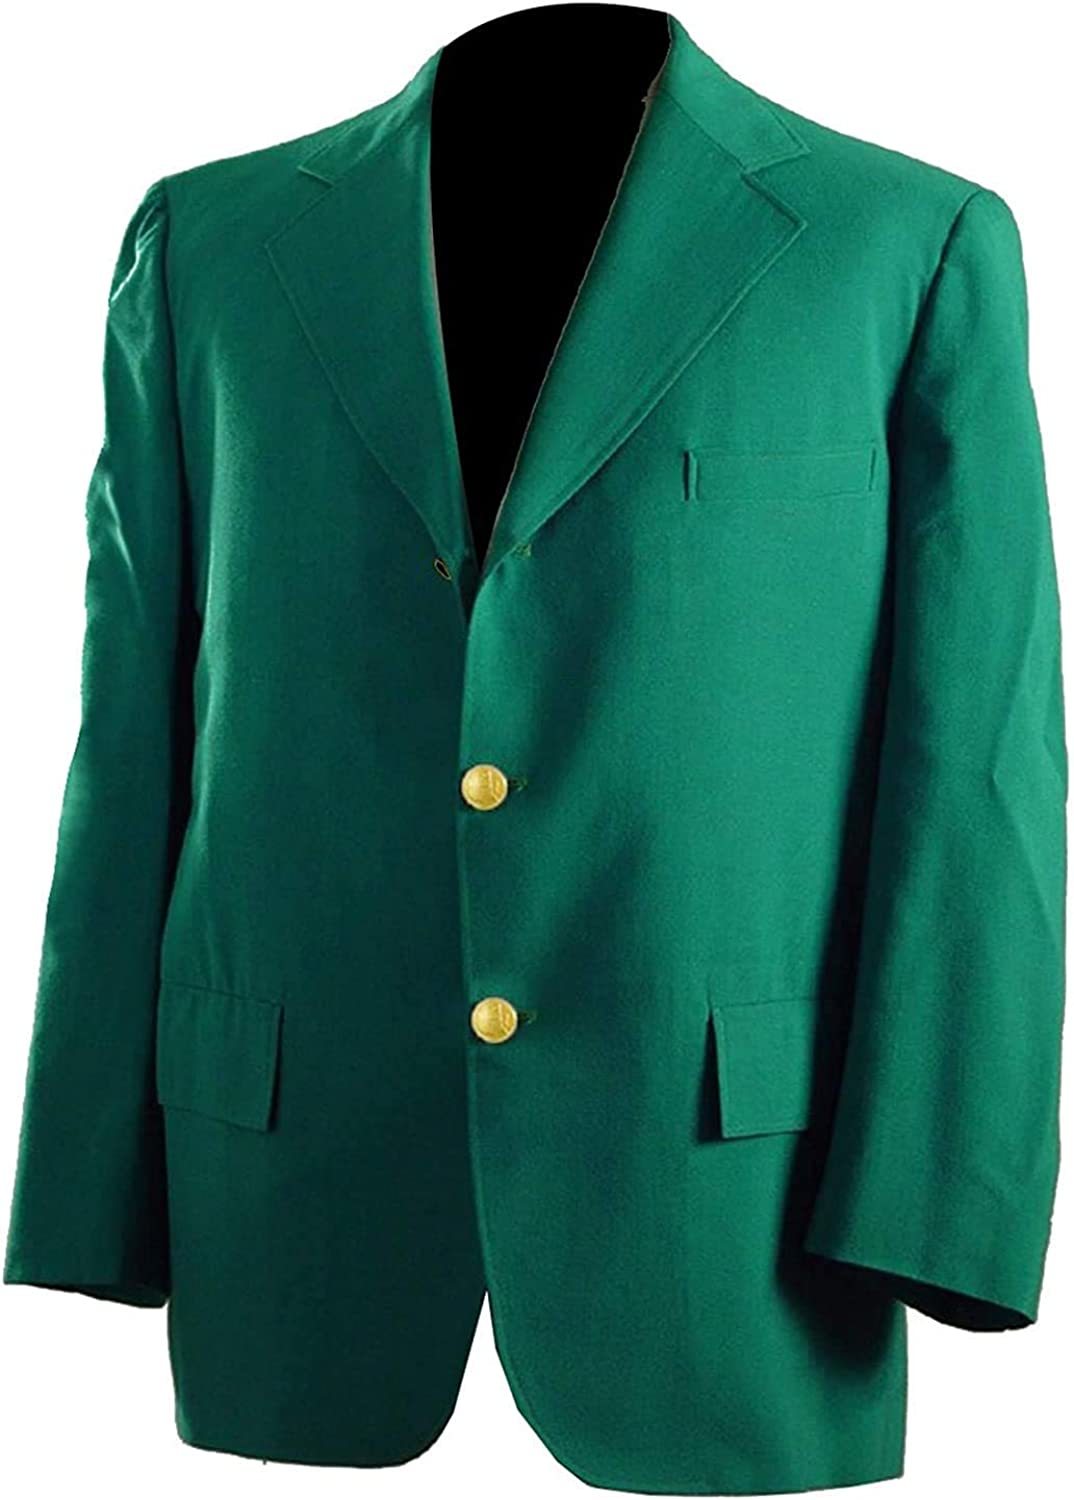 Primary image for Mens Golf Sports Coat Blazer Green Formal Cotton Jacket - Golf Green Blazer